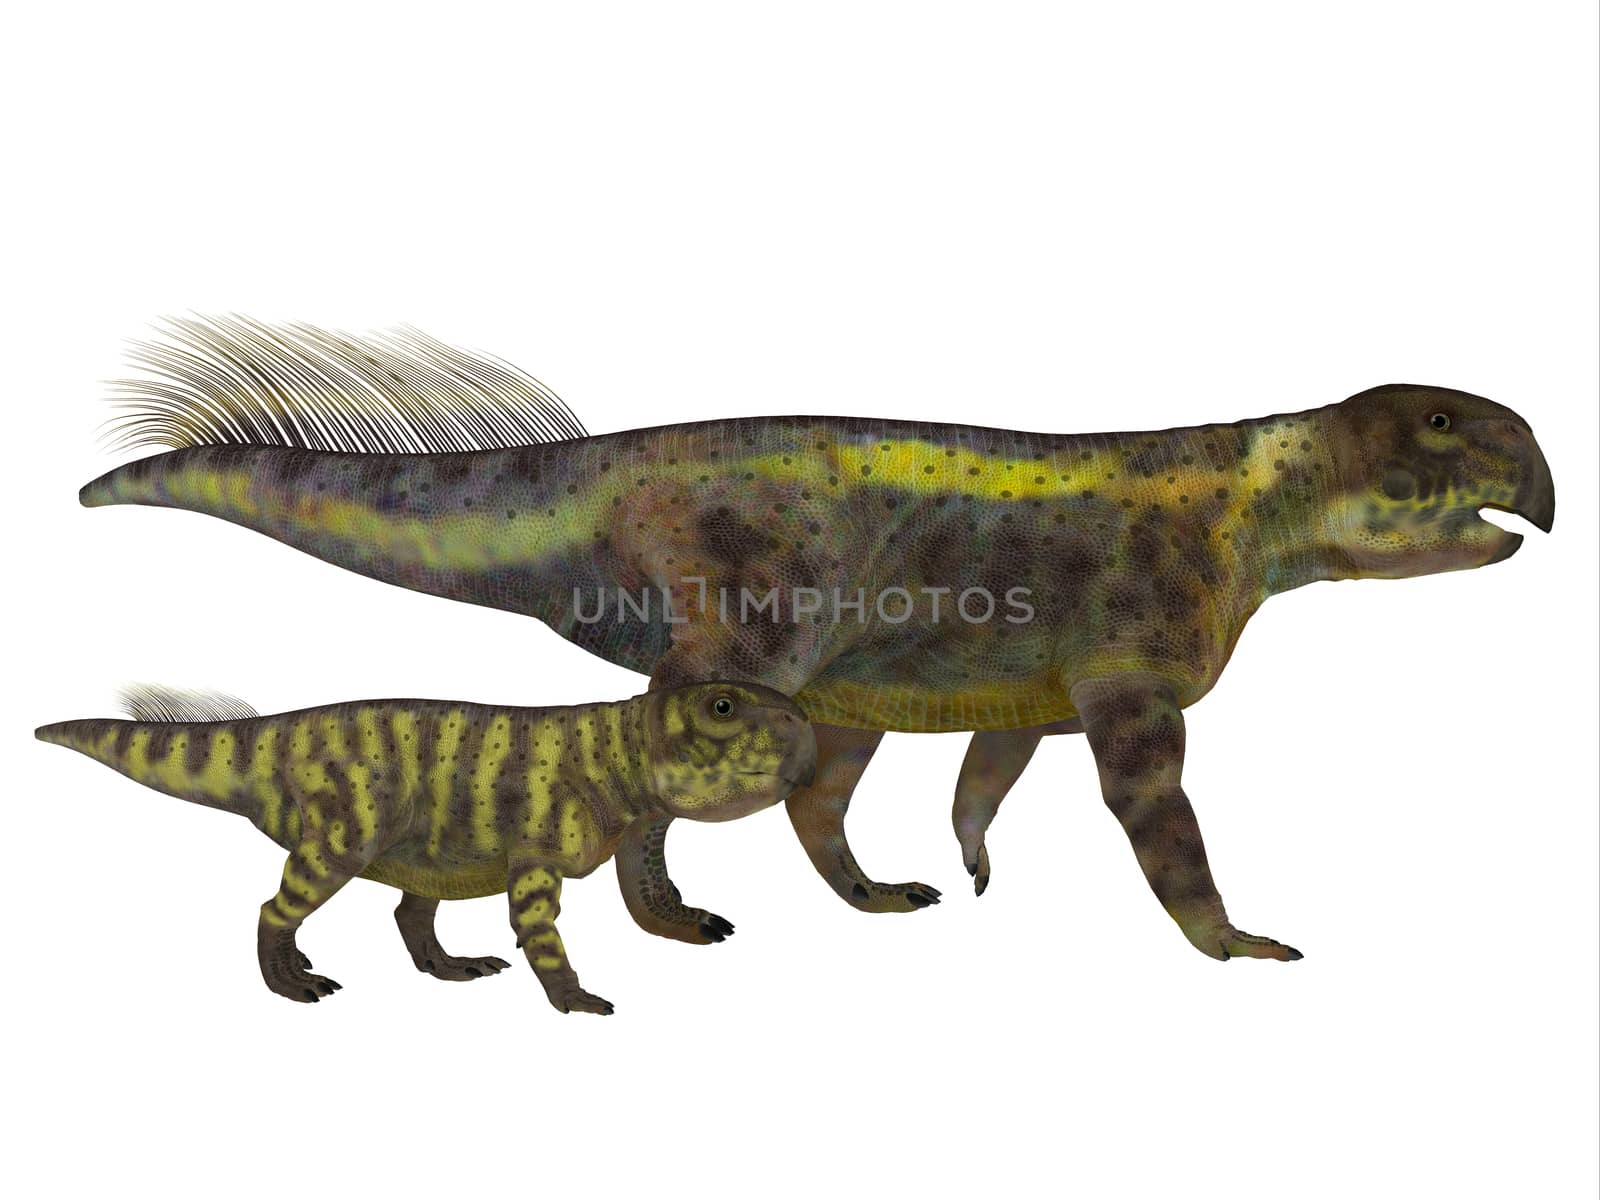 Psittacosaurus Dinosaur with Juvenile by Catmando